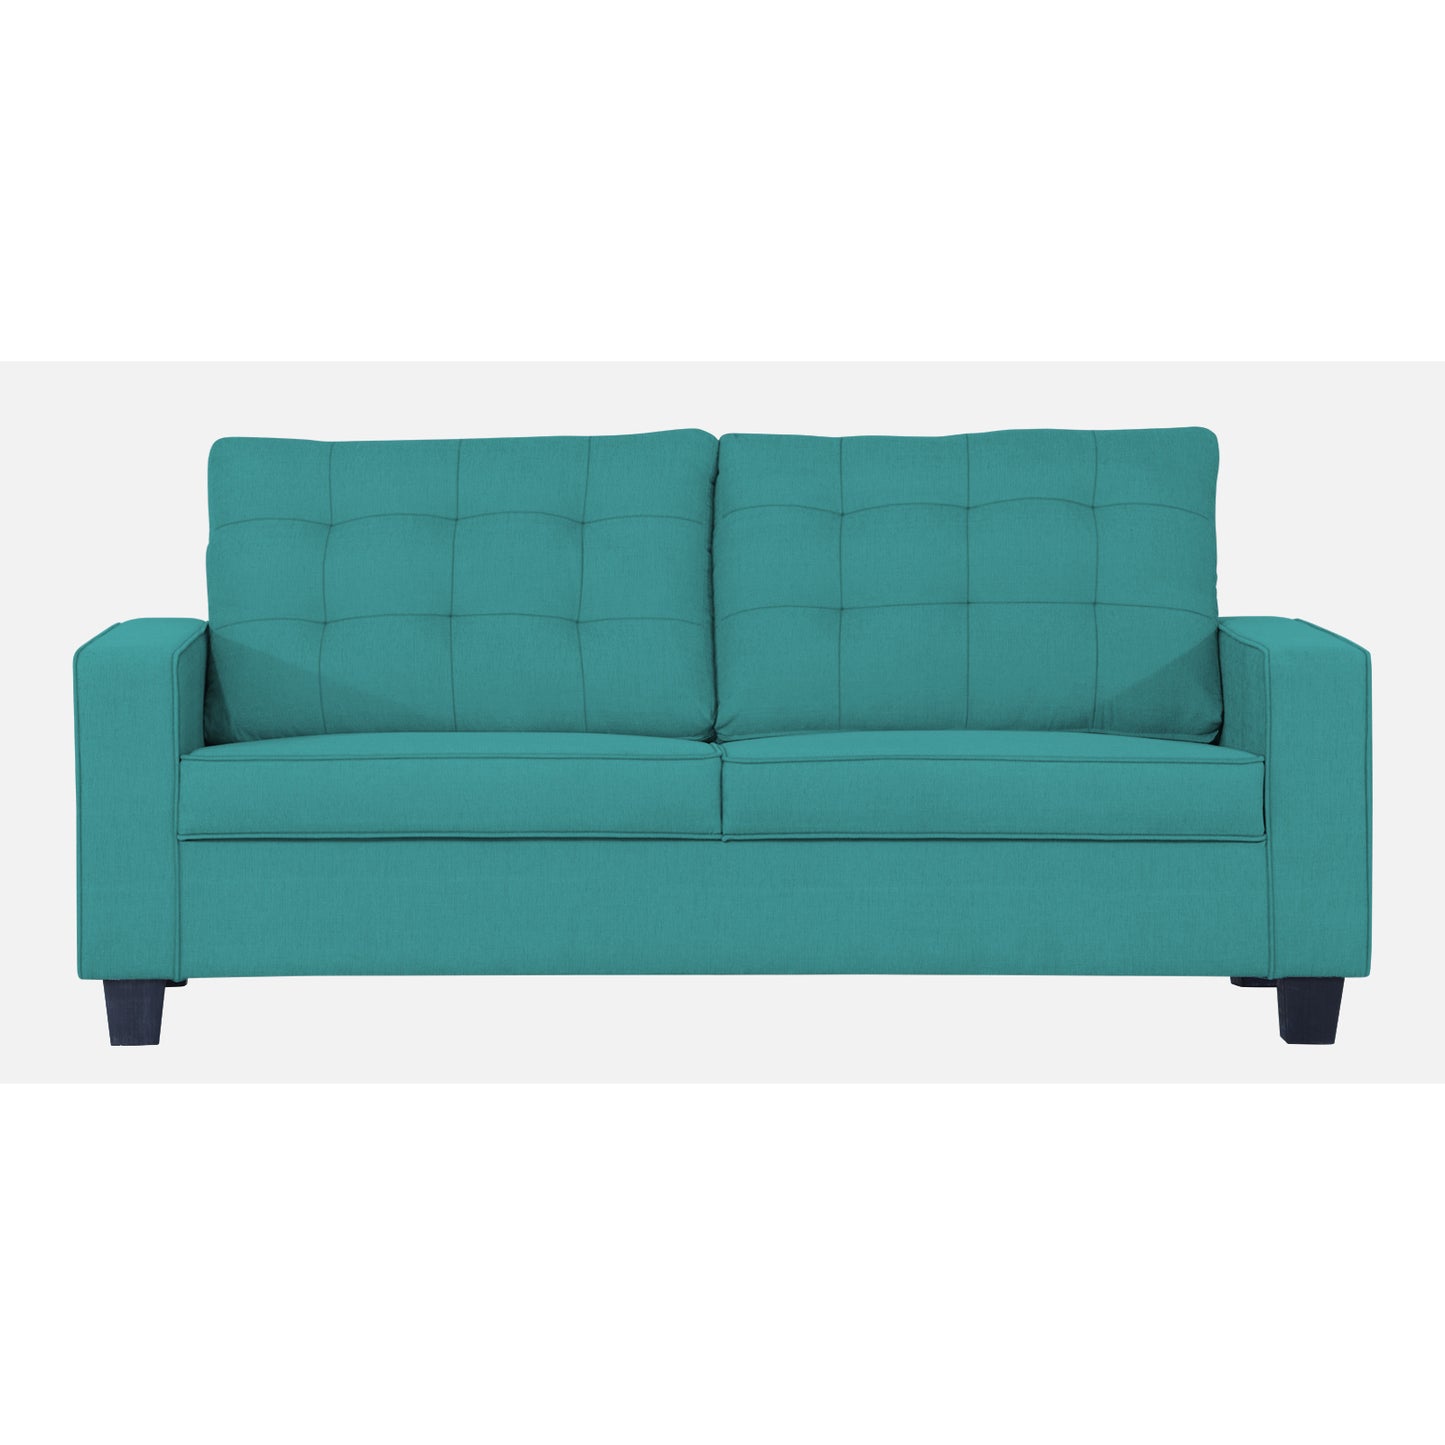 Adorn India Raptor 3 Seater Sofa (Aqua Blue)